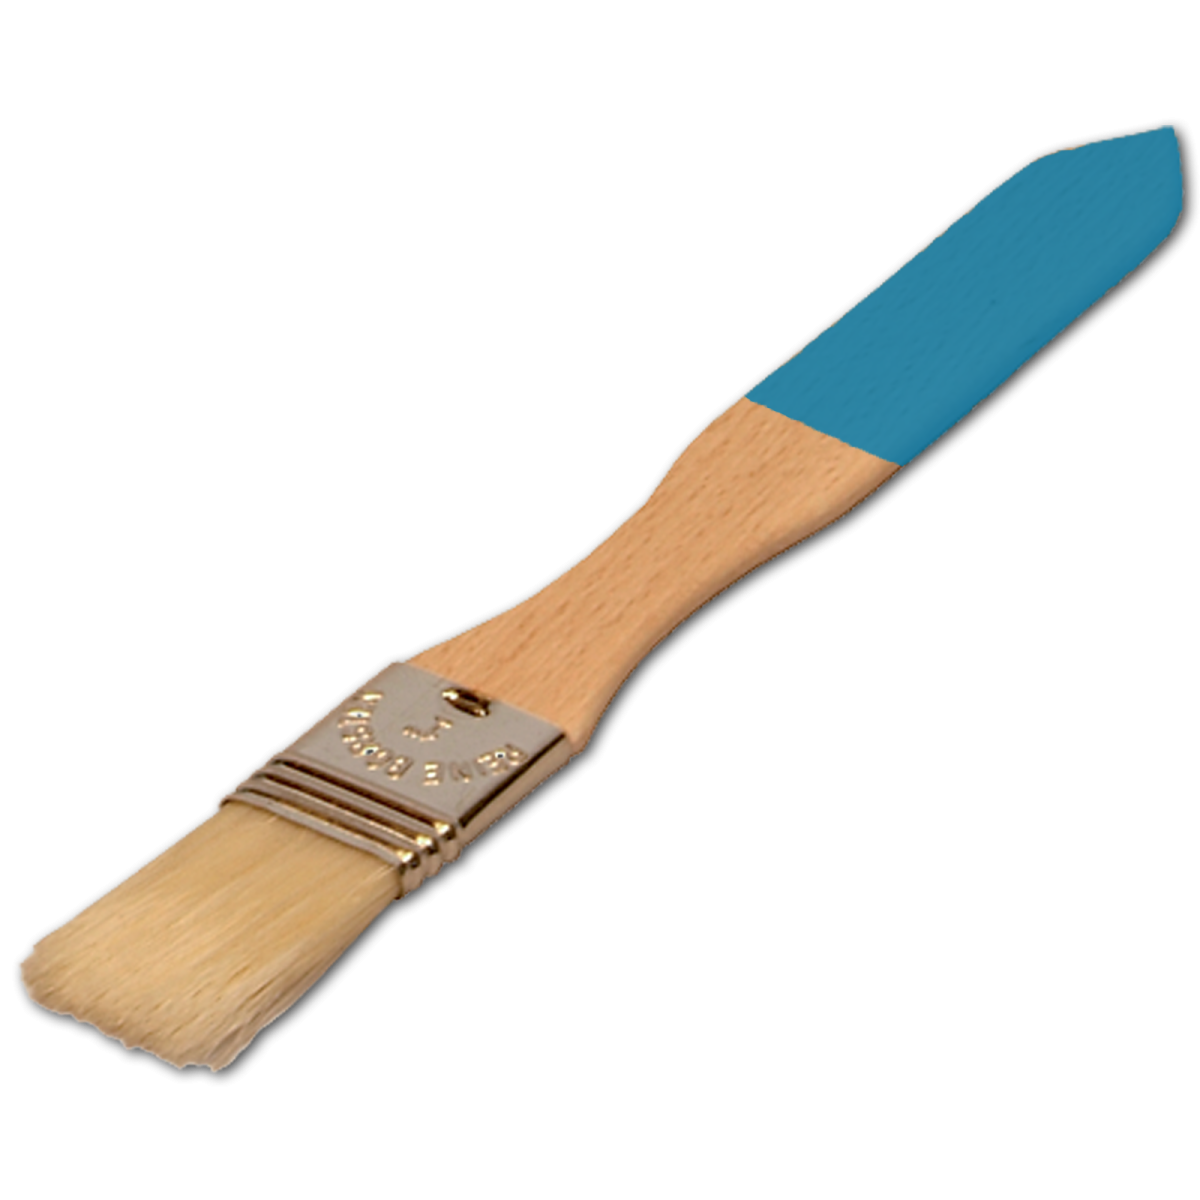 Haushaltspinsel, flach, 1 Zoll, mit farbigem Griff, himmelblau, aus Holz 20 cm